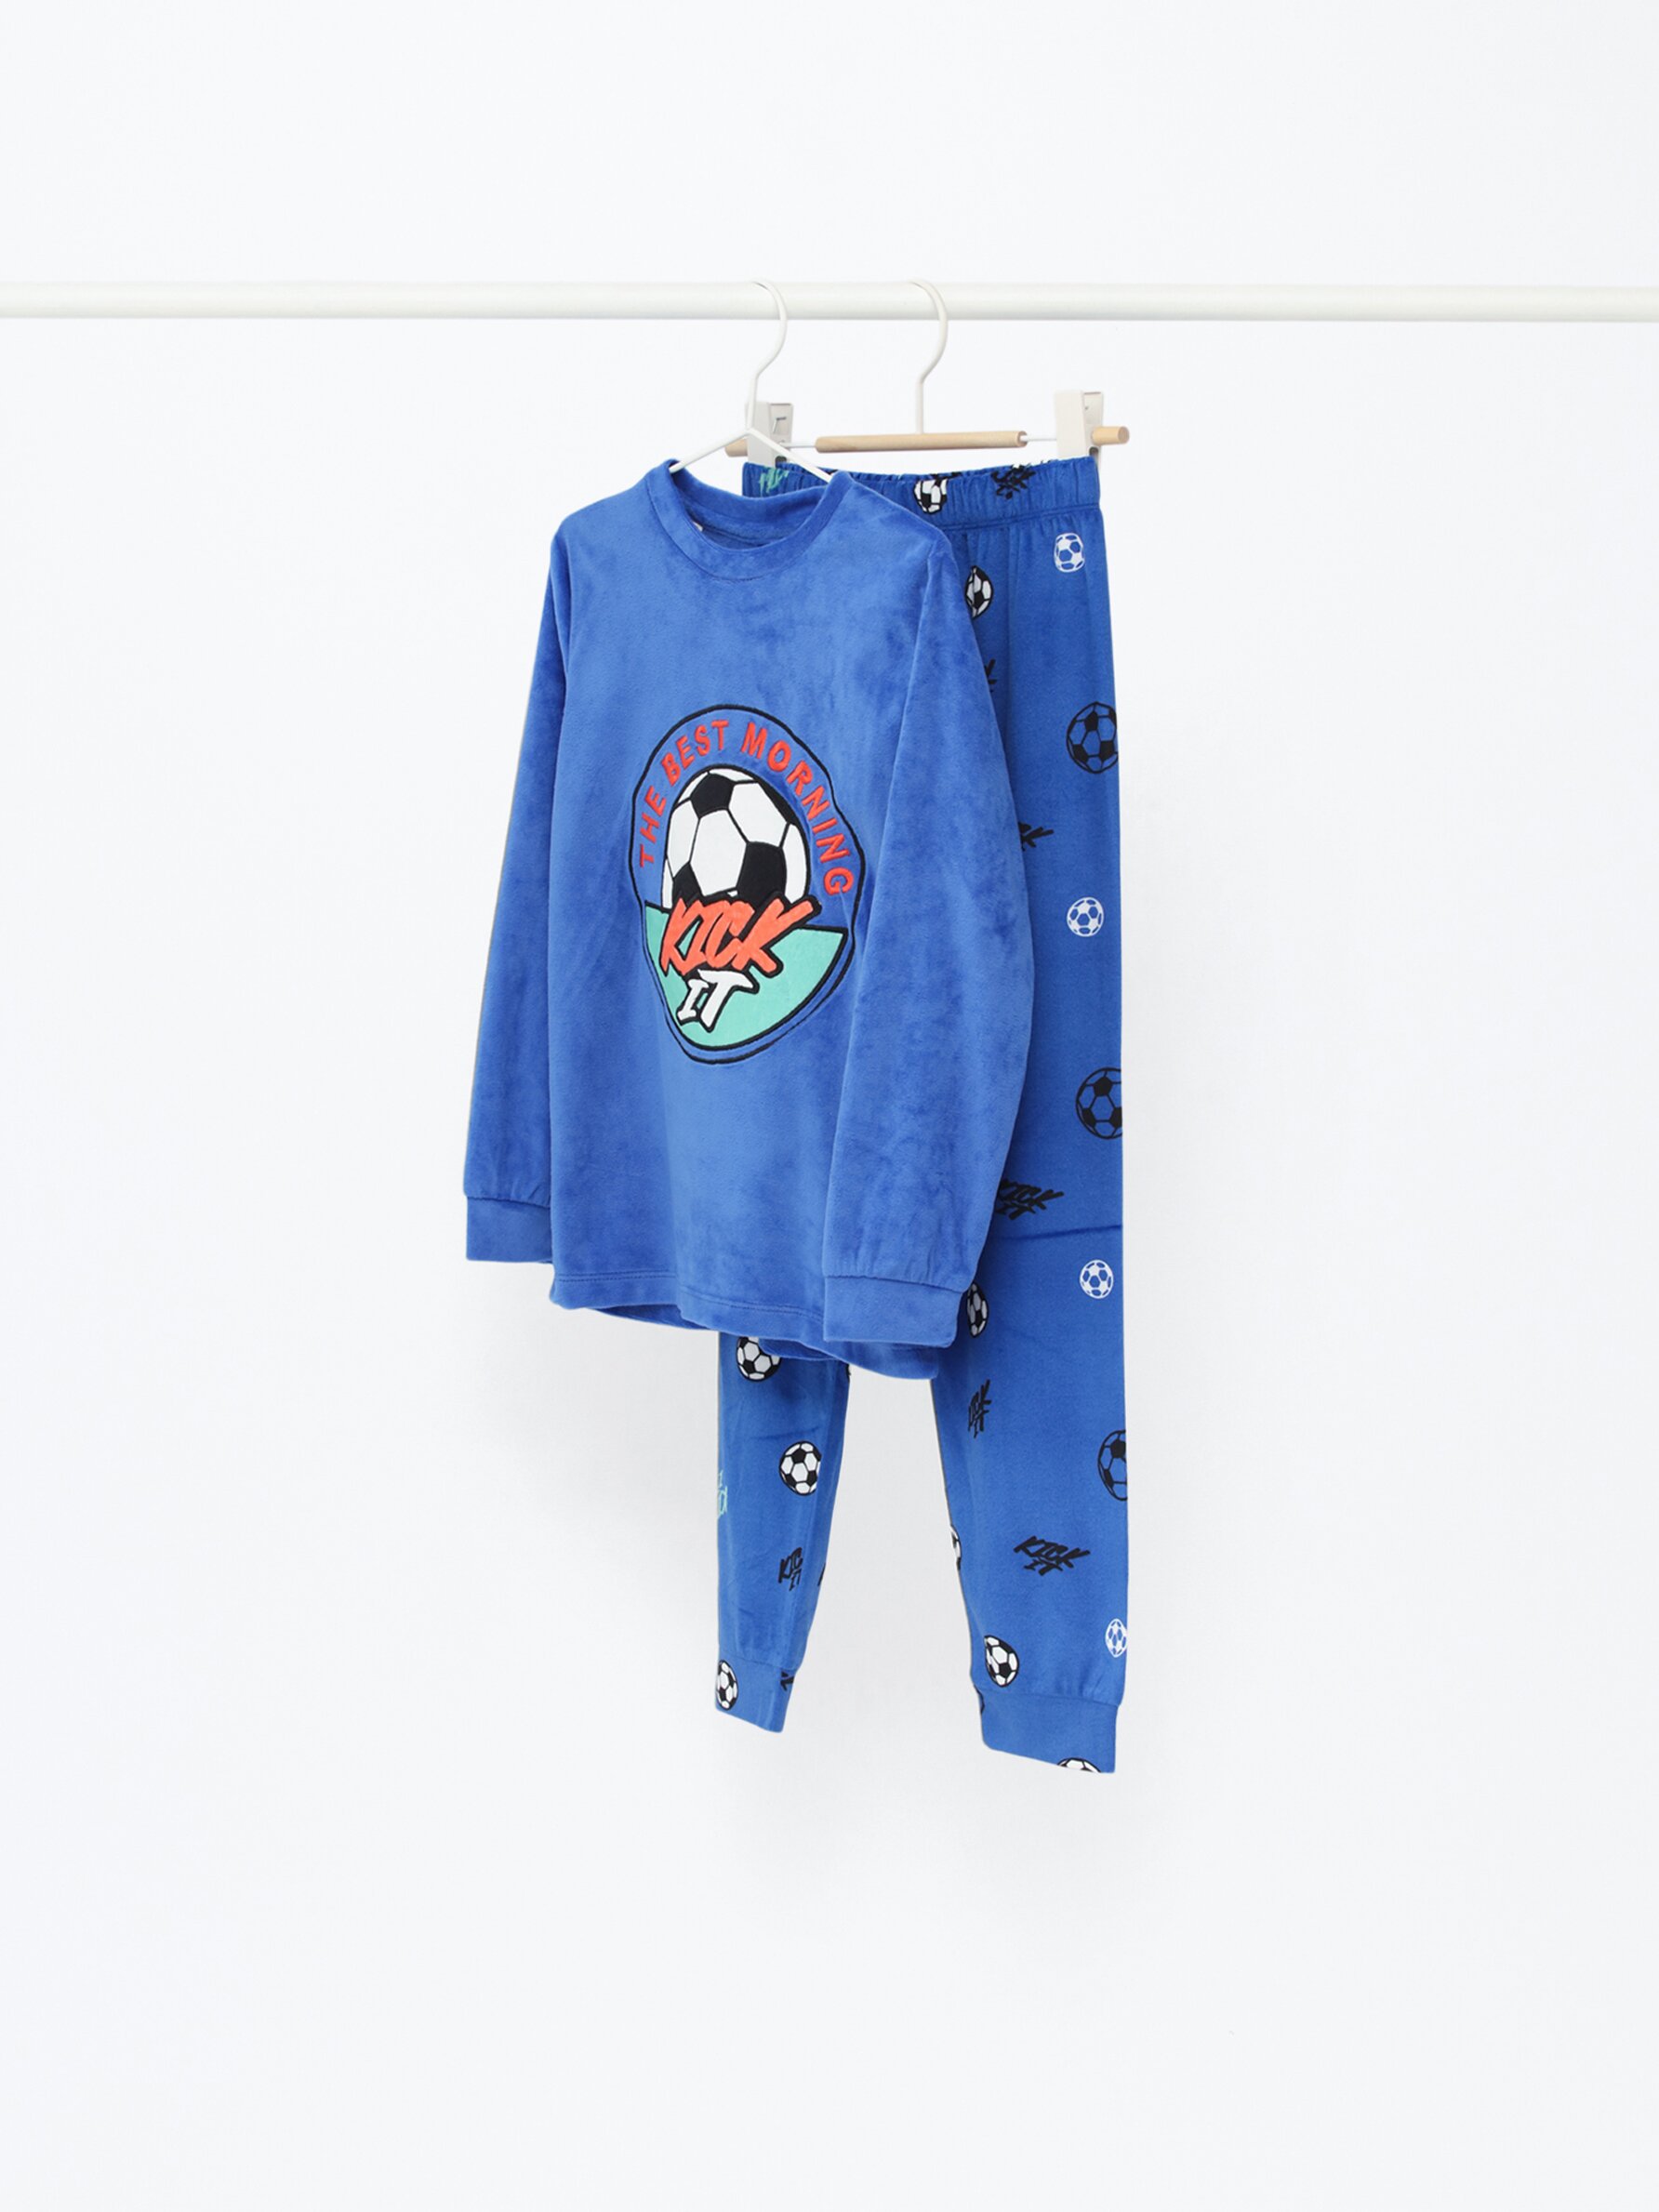 Conjunto de pijama de pelito estampado fútbol - Pijamas - ROPA INTERIOR, PIJAMAS - Niño - Niños 